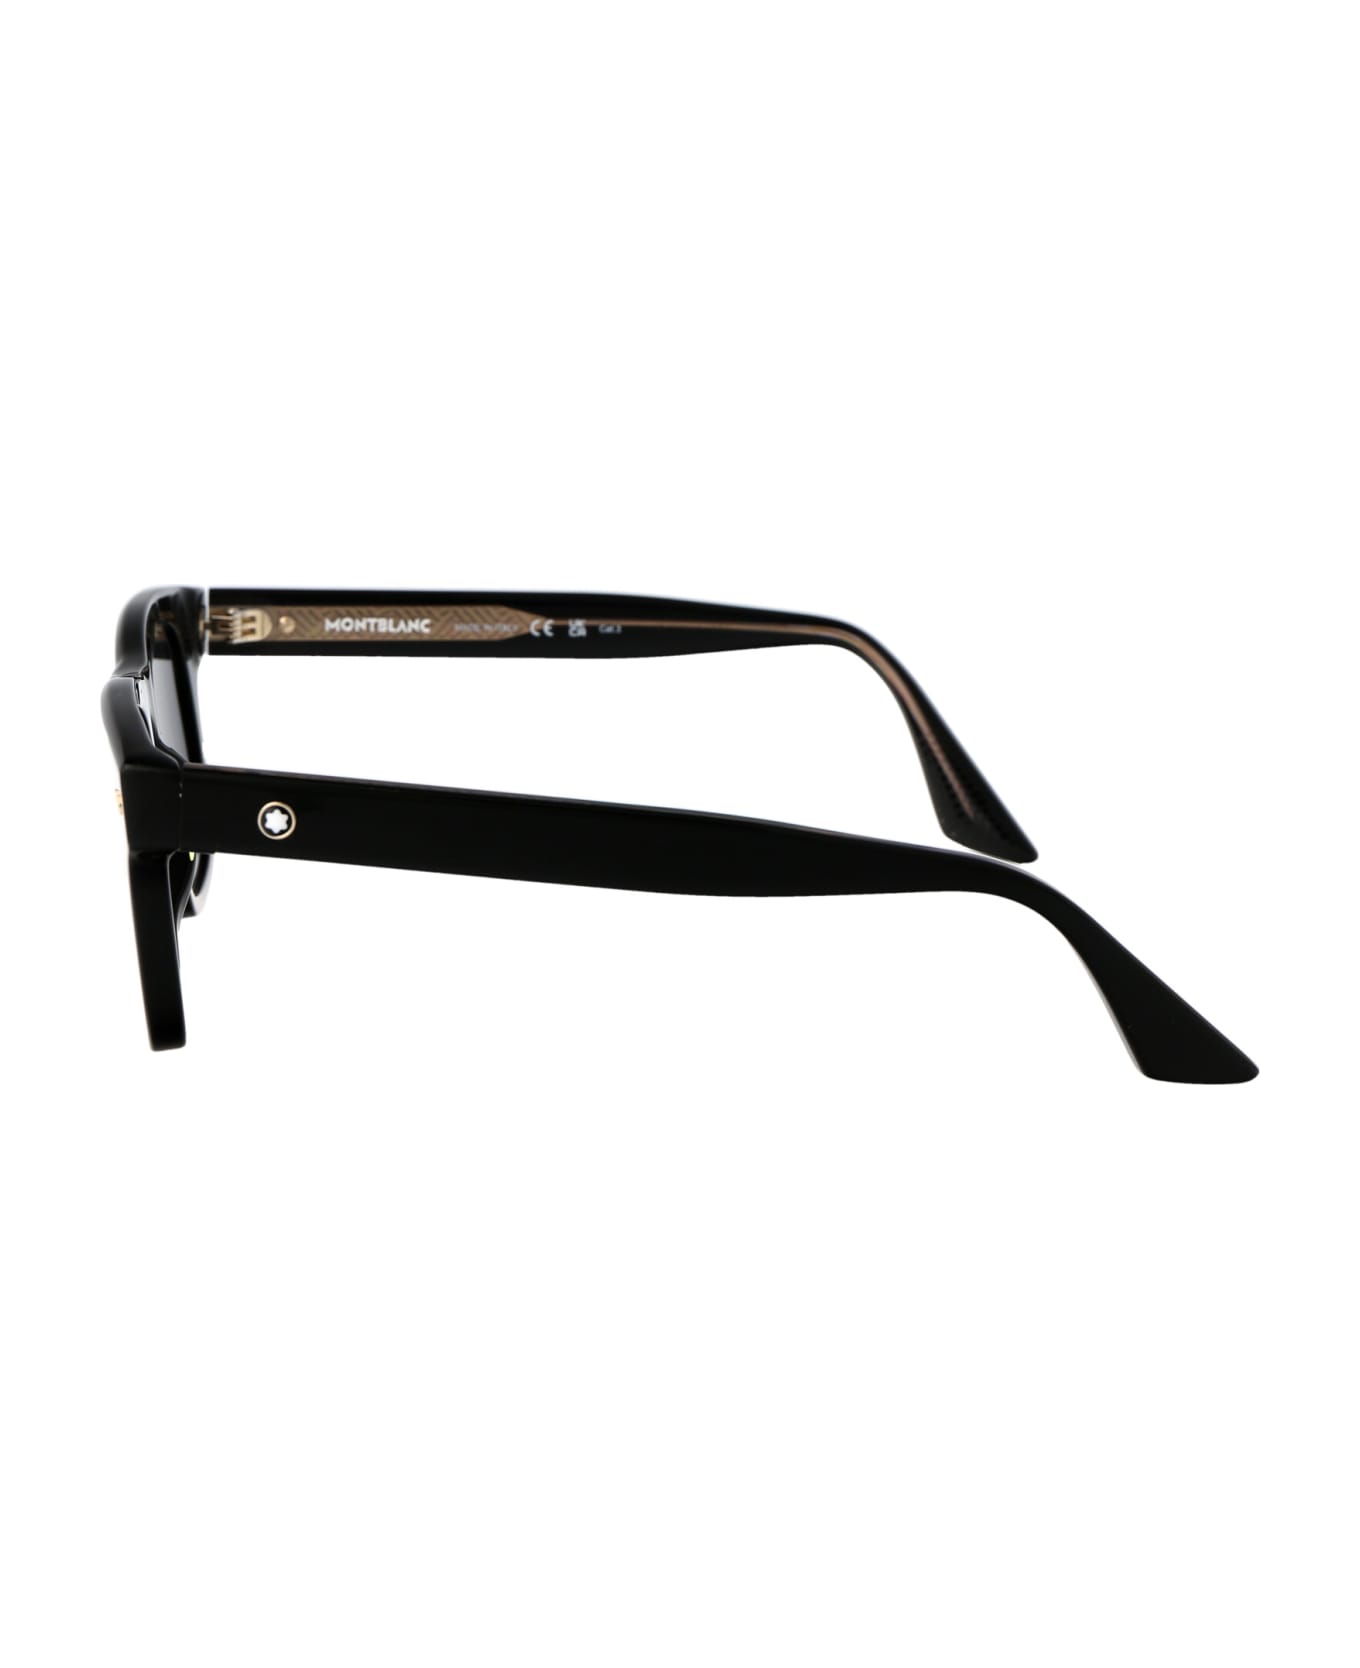 Montblanc Mb0254s Sunglasses - 001 BLACK BLACK SMOKE サングラス